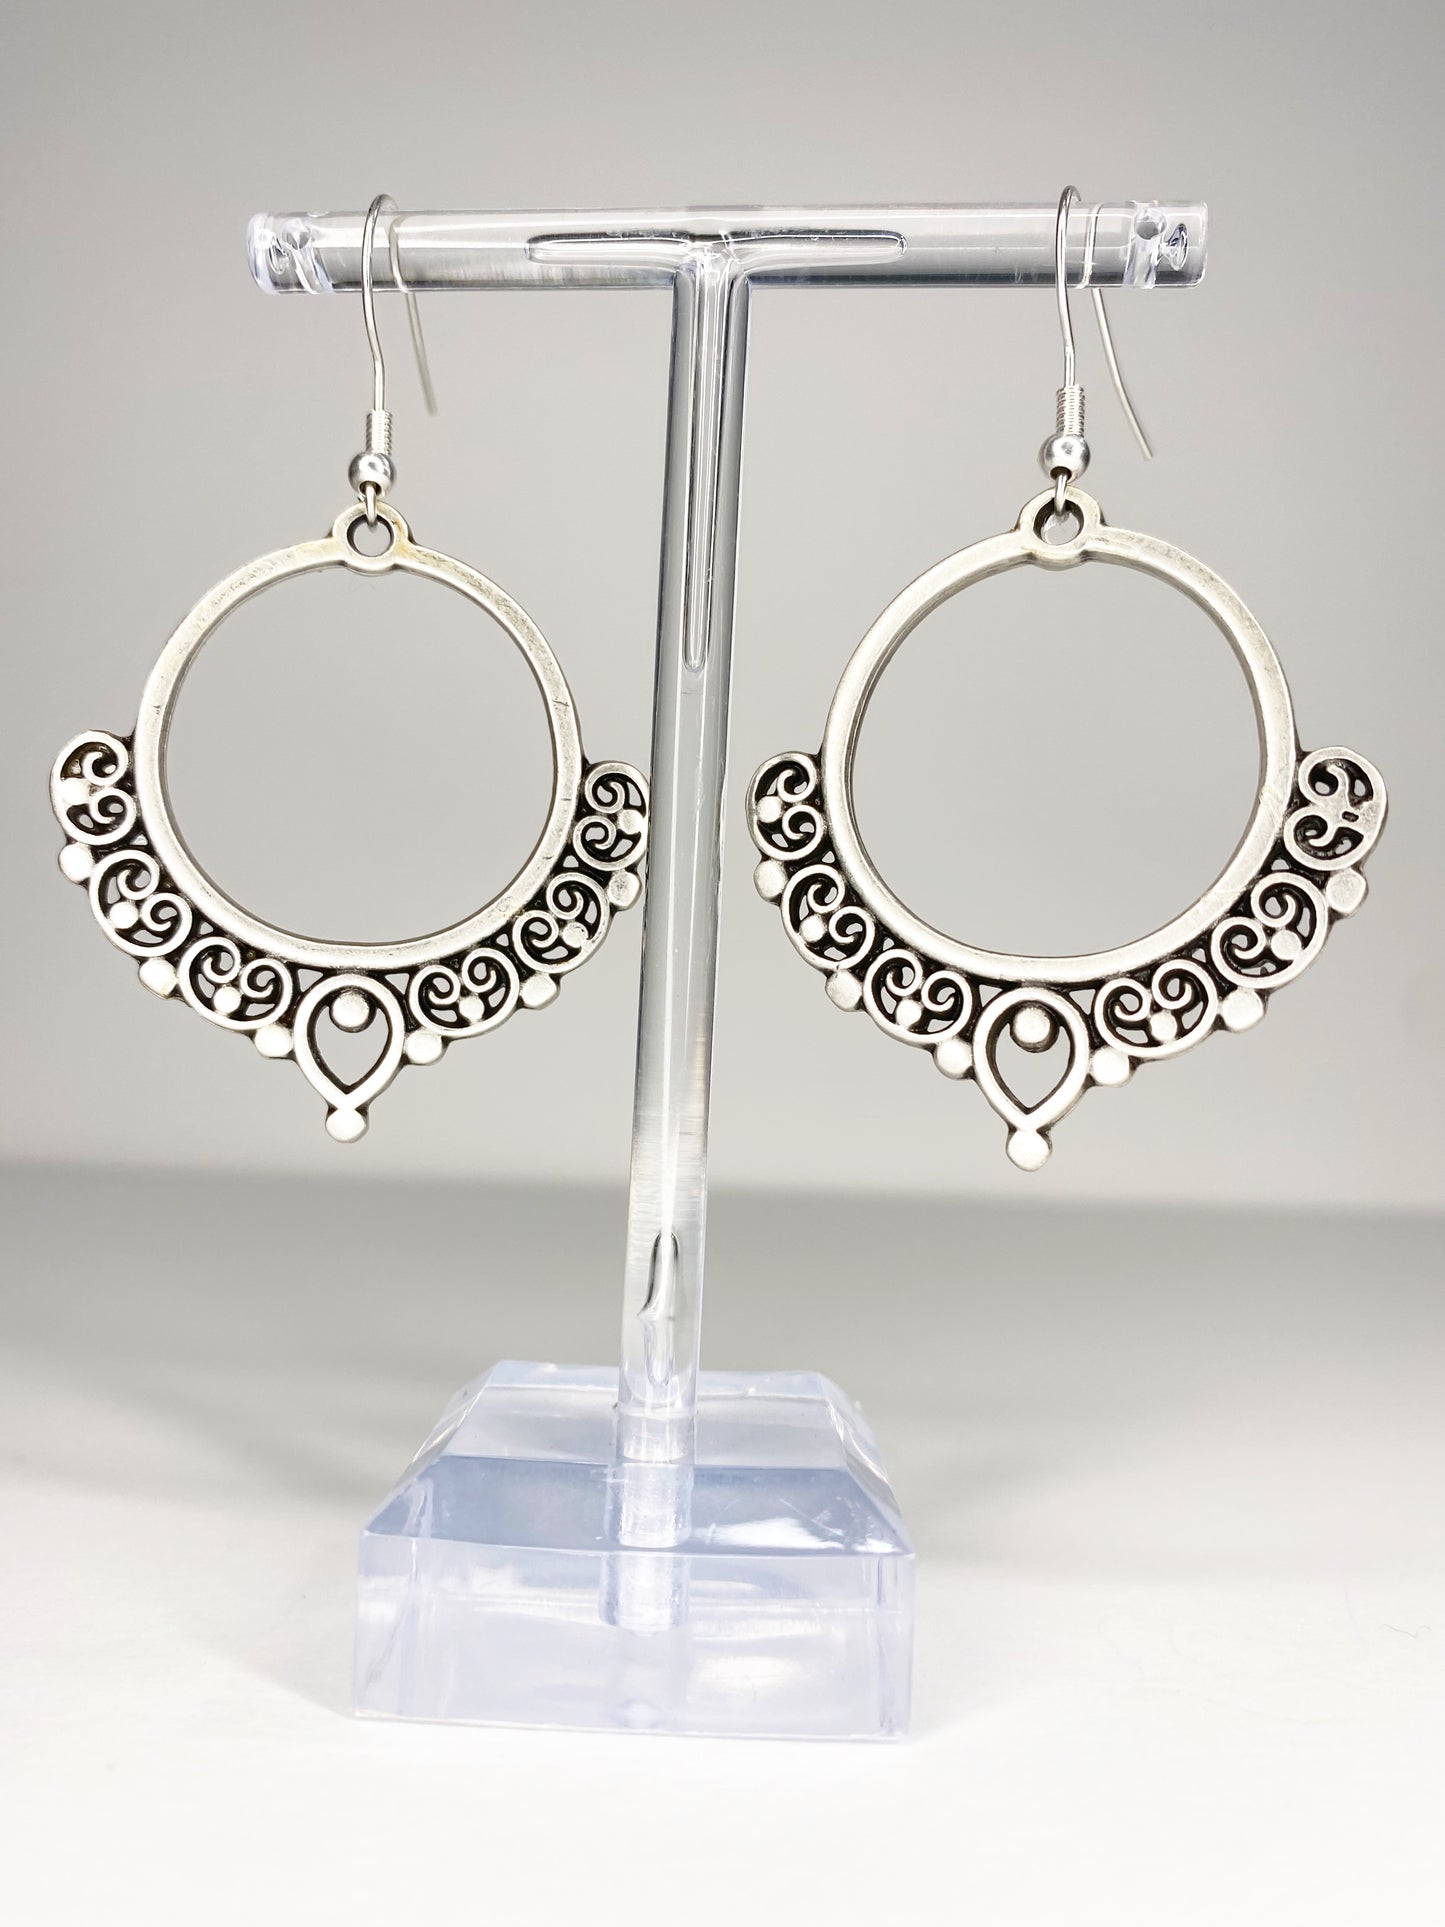 Hoop heart charm silver earrings, Sterling silver jewelry - Andria Bieber Designs 